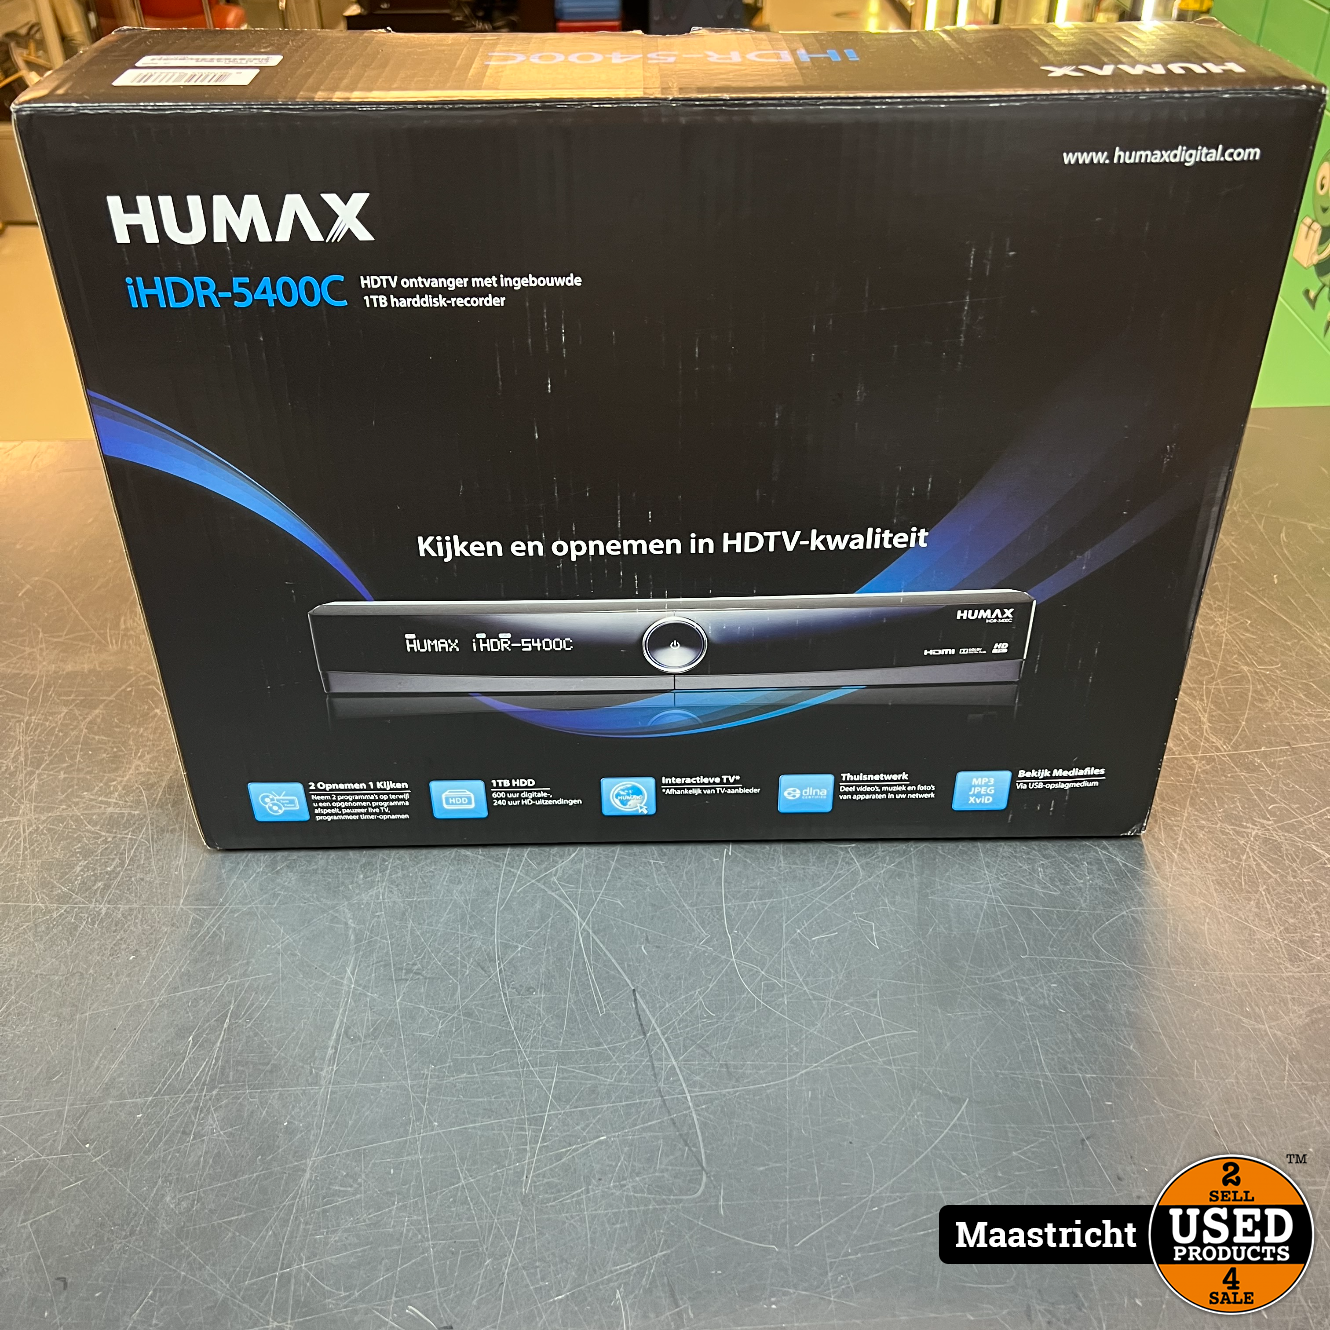 Humax iHDR-5400C interactieve HDTV ontvanger met 1TB HDD recorder - Used Maastricht